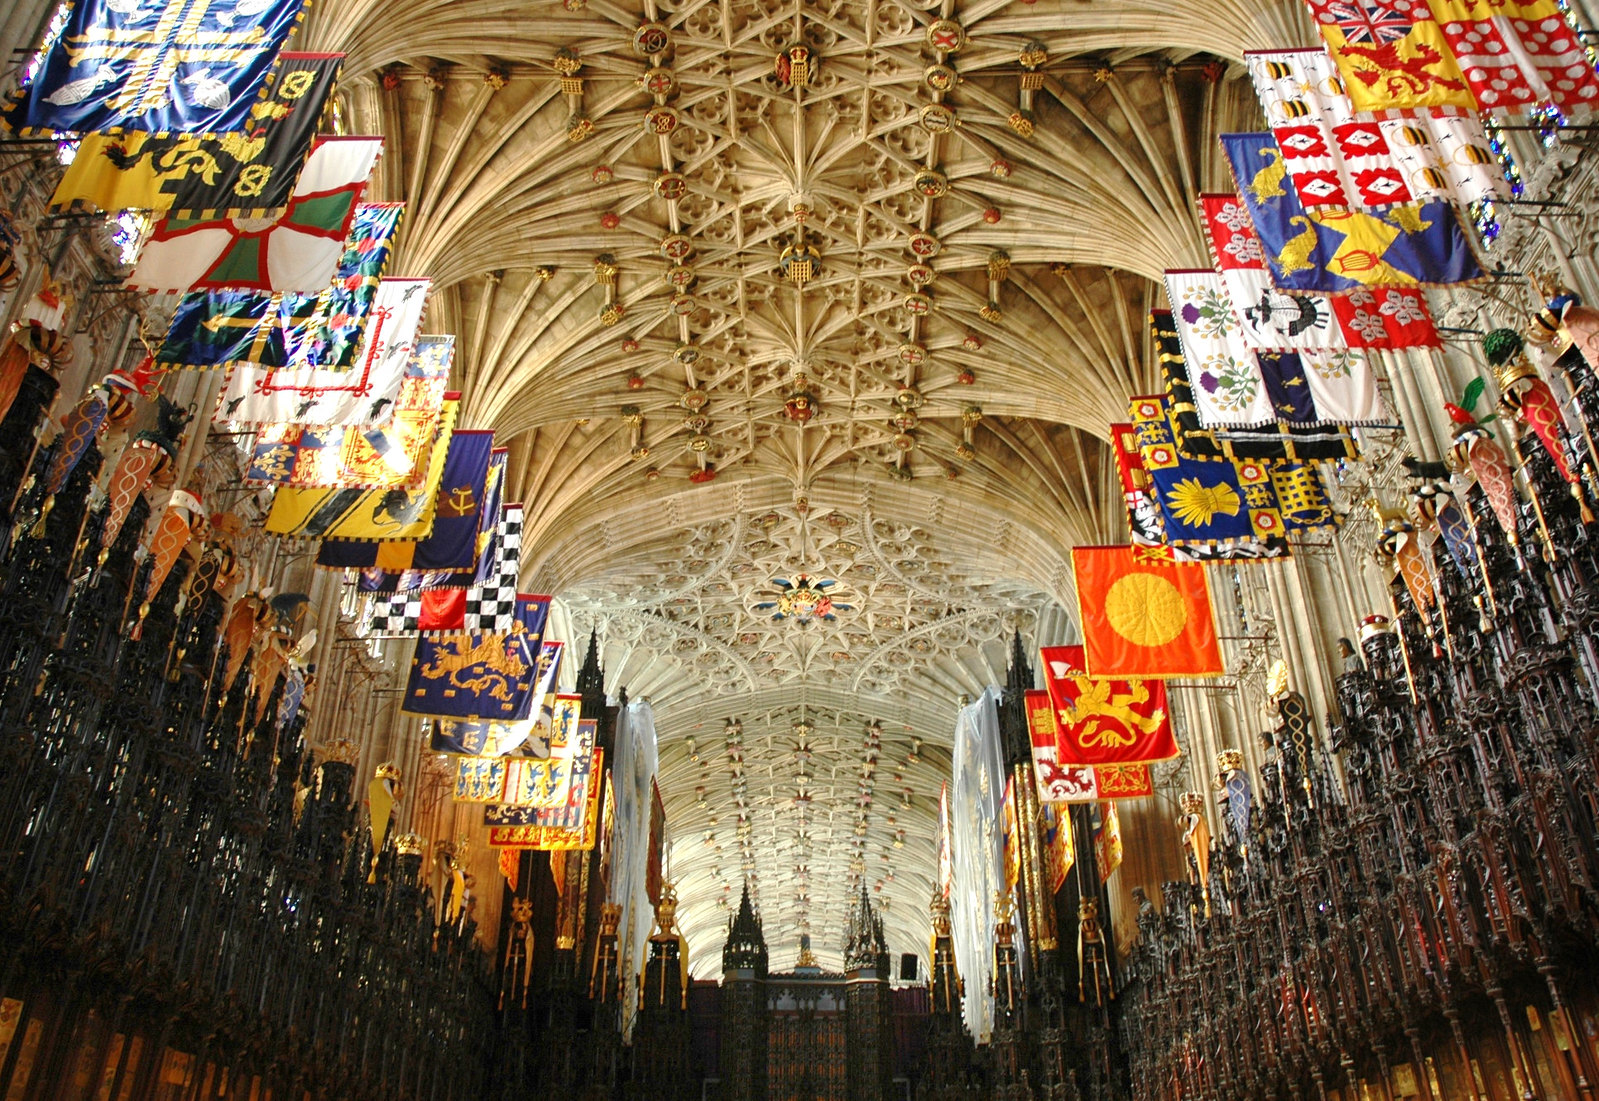 The Choir of St George's Chapel, Windsor Castle. Credit Josep Renalias